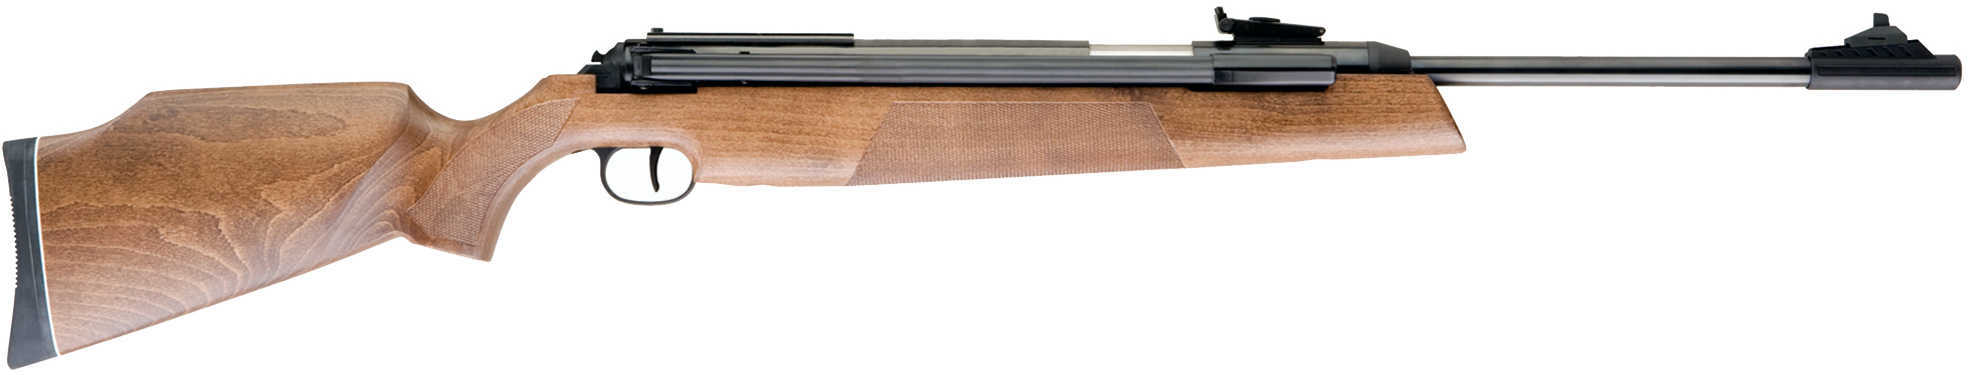 Umarex USA Model 54 Hardwood, .22 Pellet 2166225